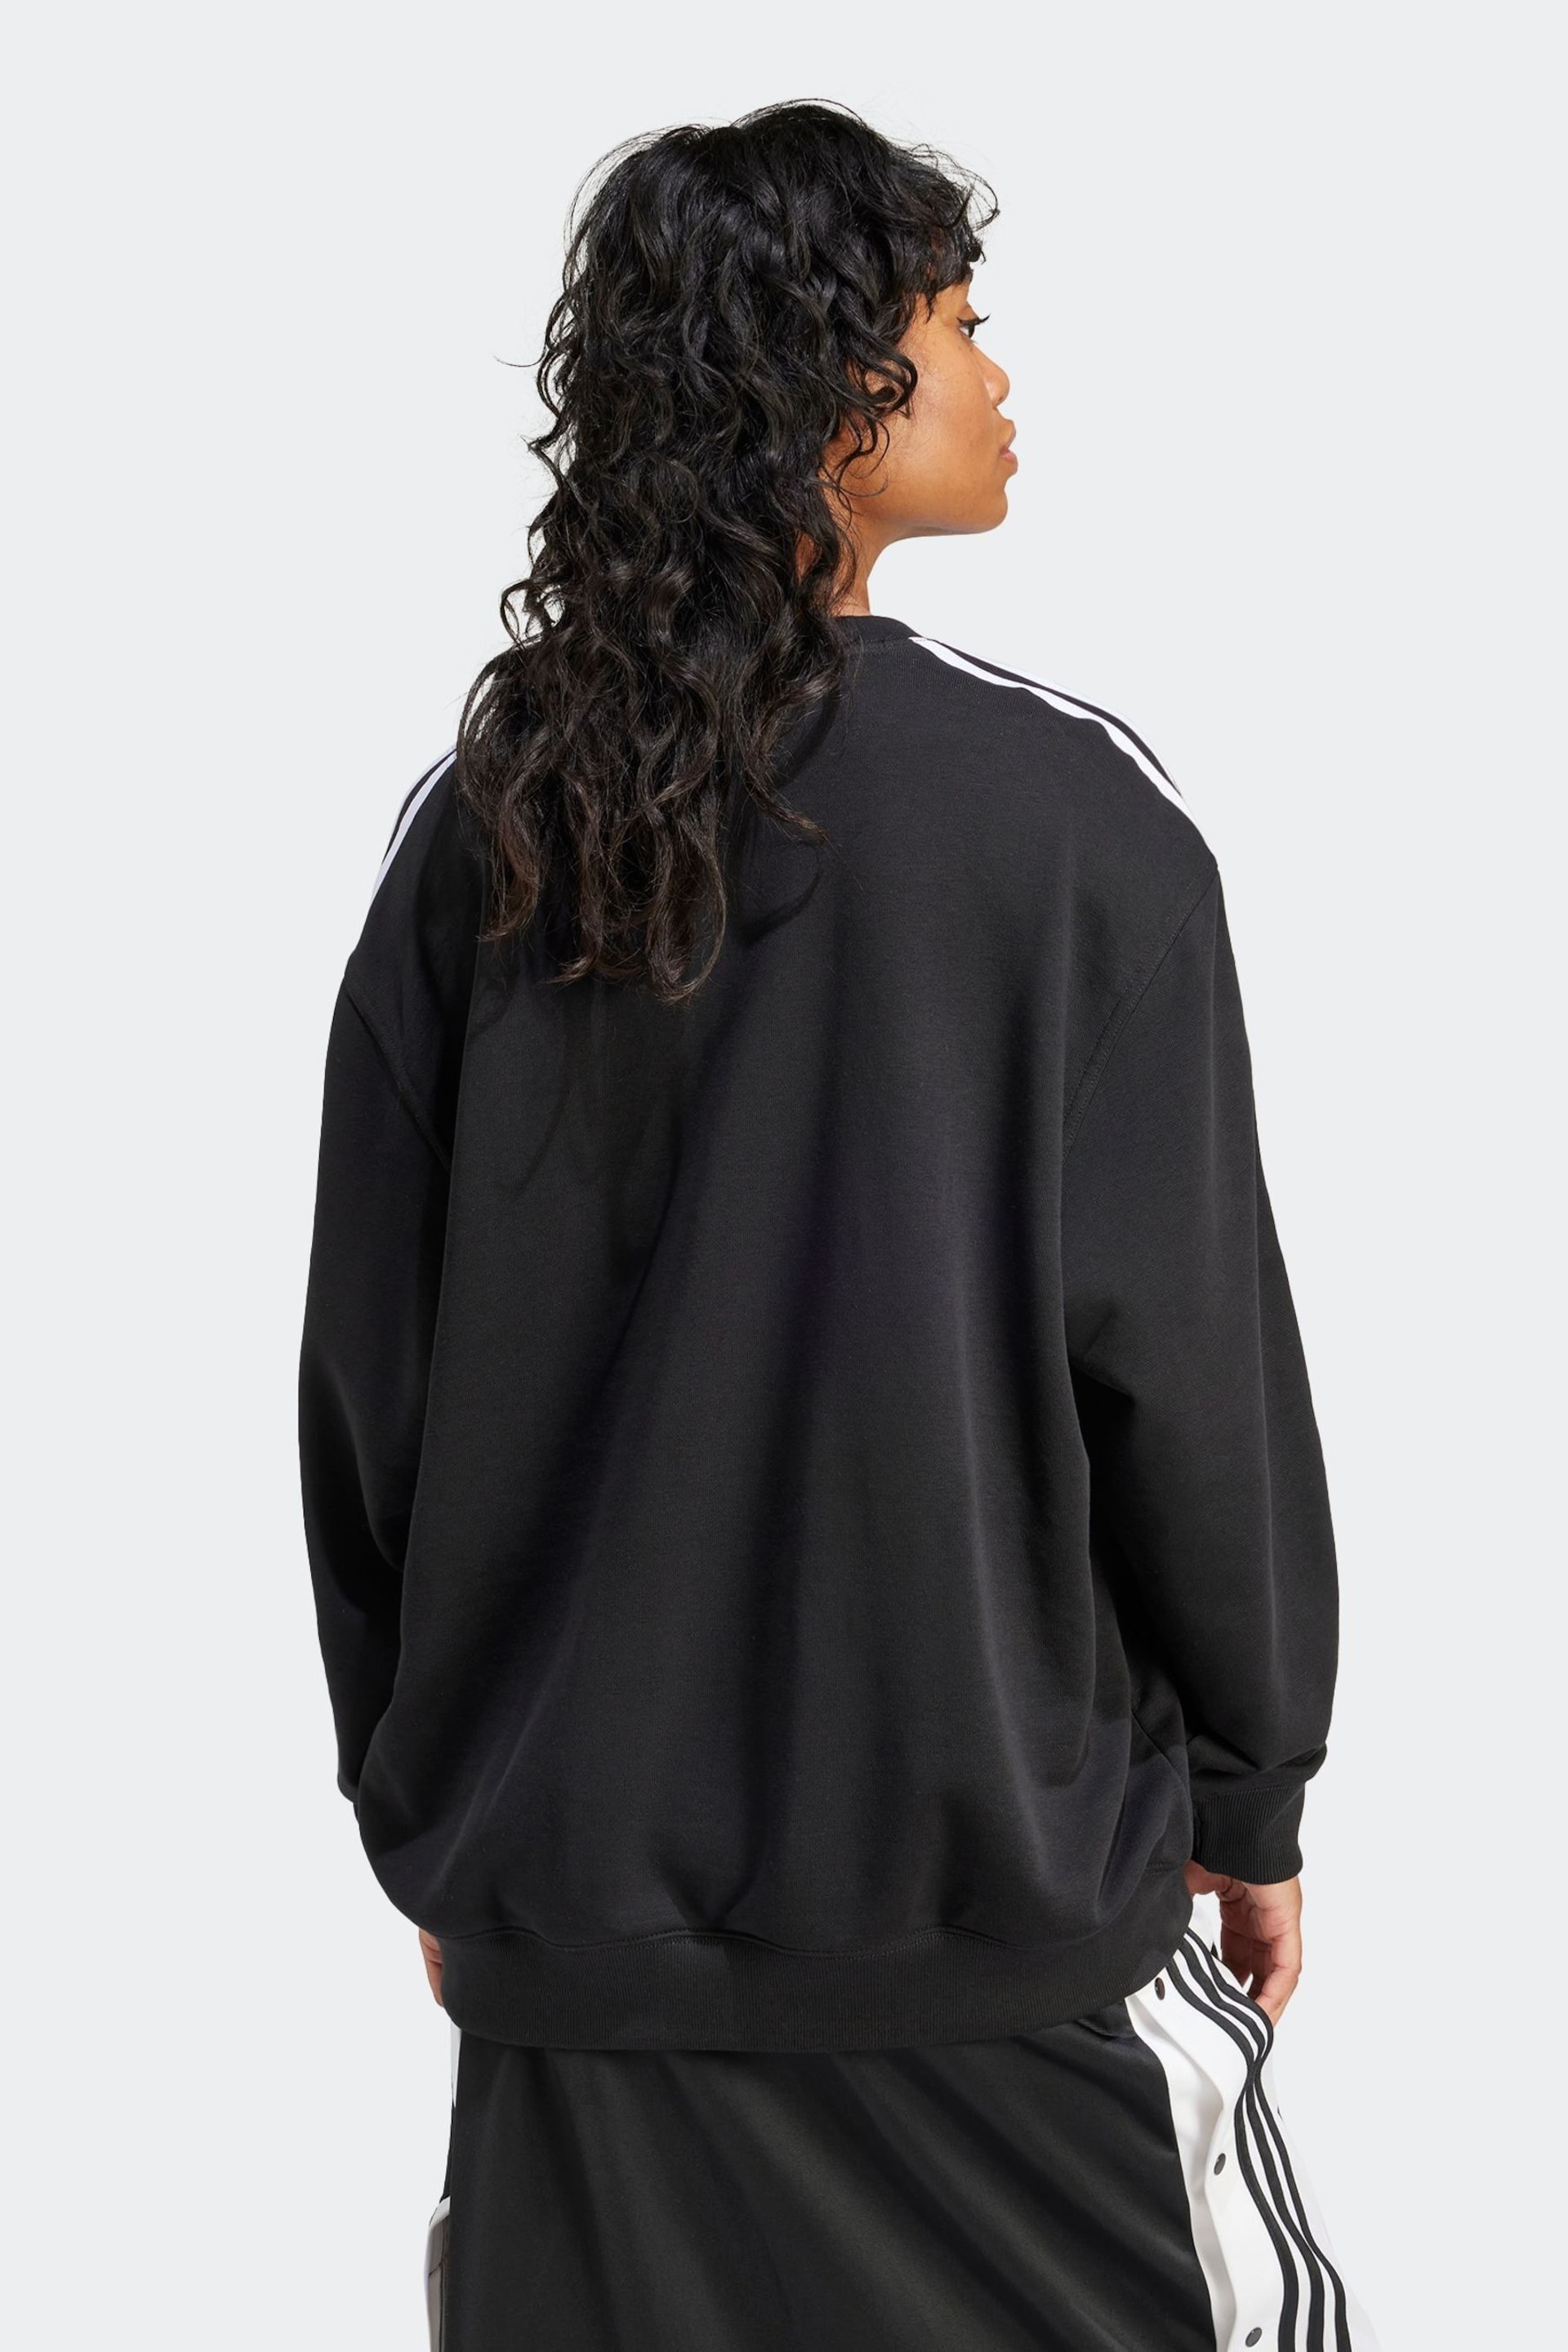 adidas Originals Oversized 3-Stripes Crew Black Sweatshirt - Image 3 of 7